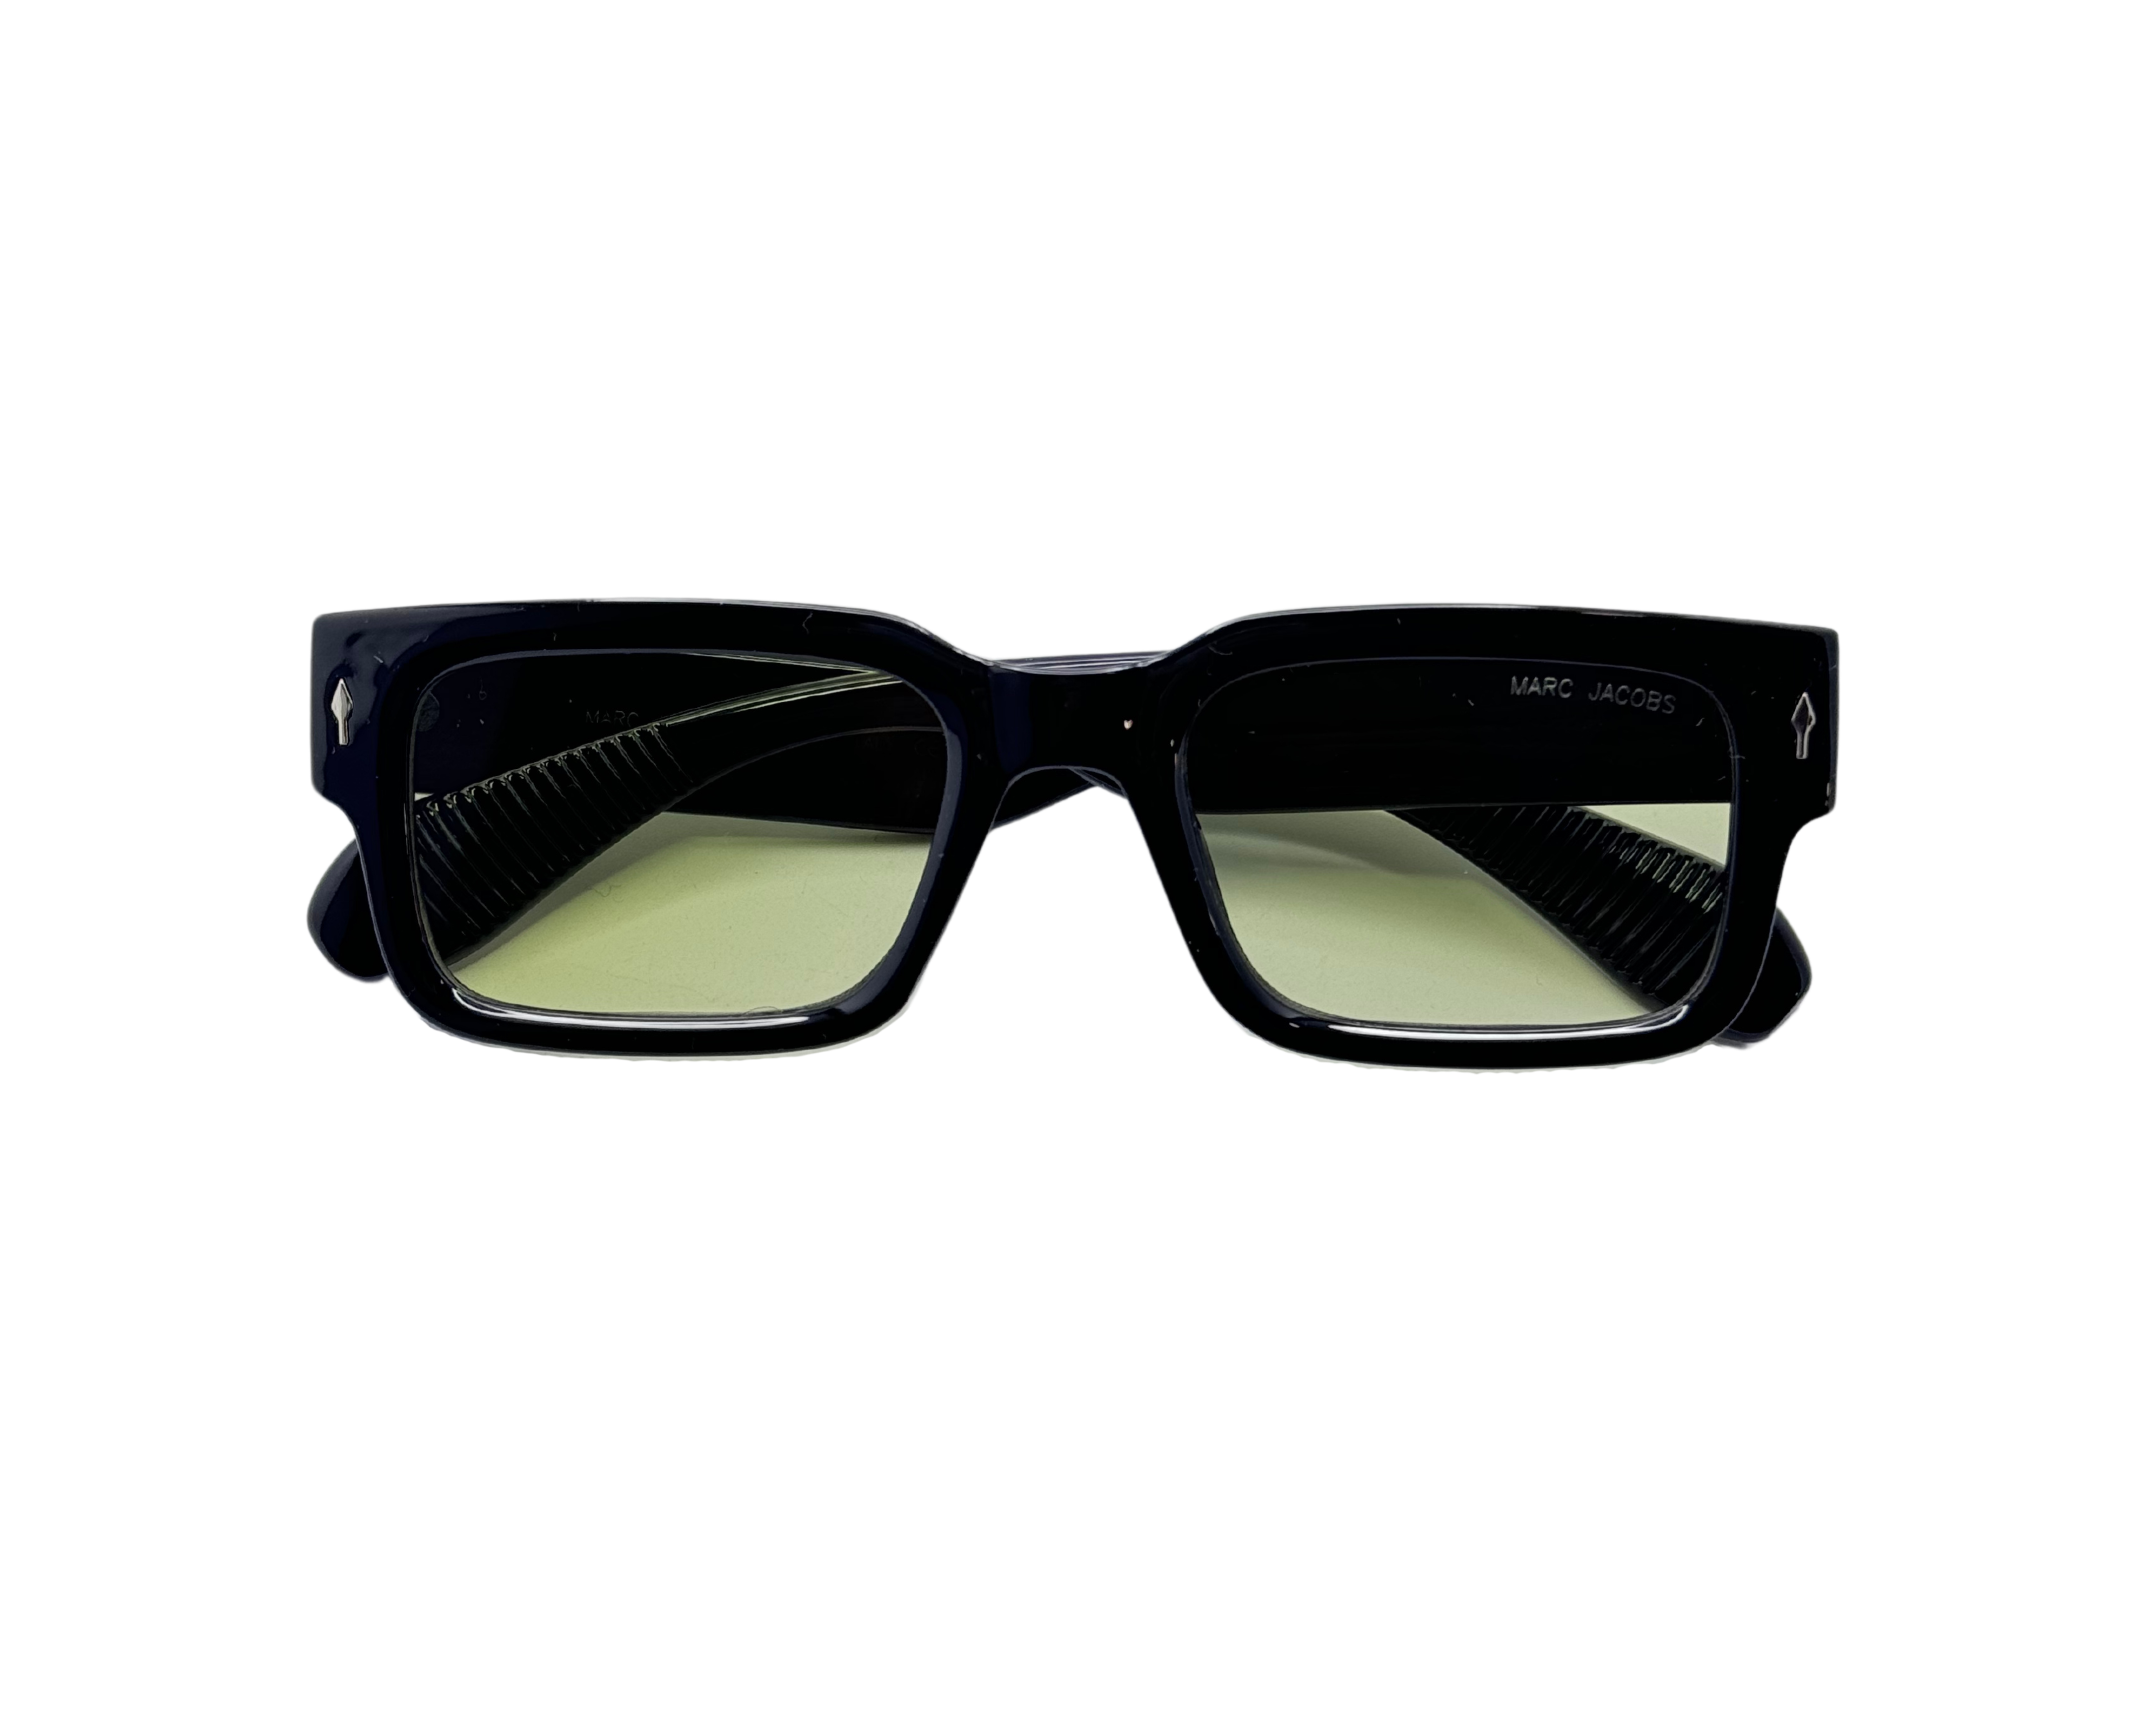 NS Deluxe - 6767 - Black - Sunglasses